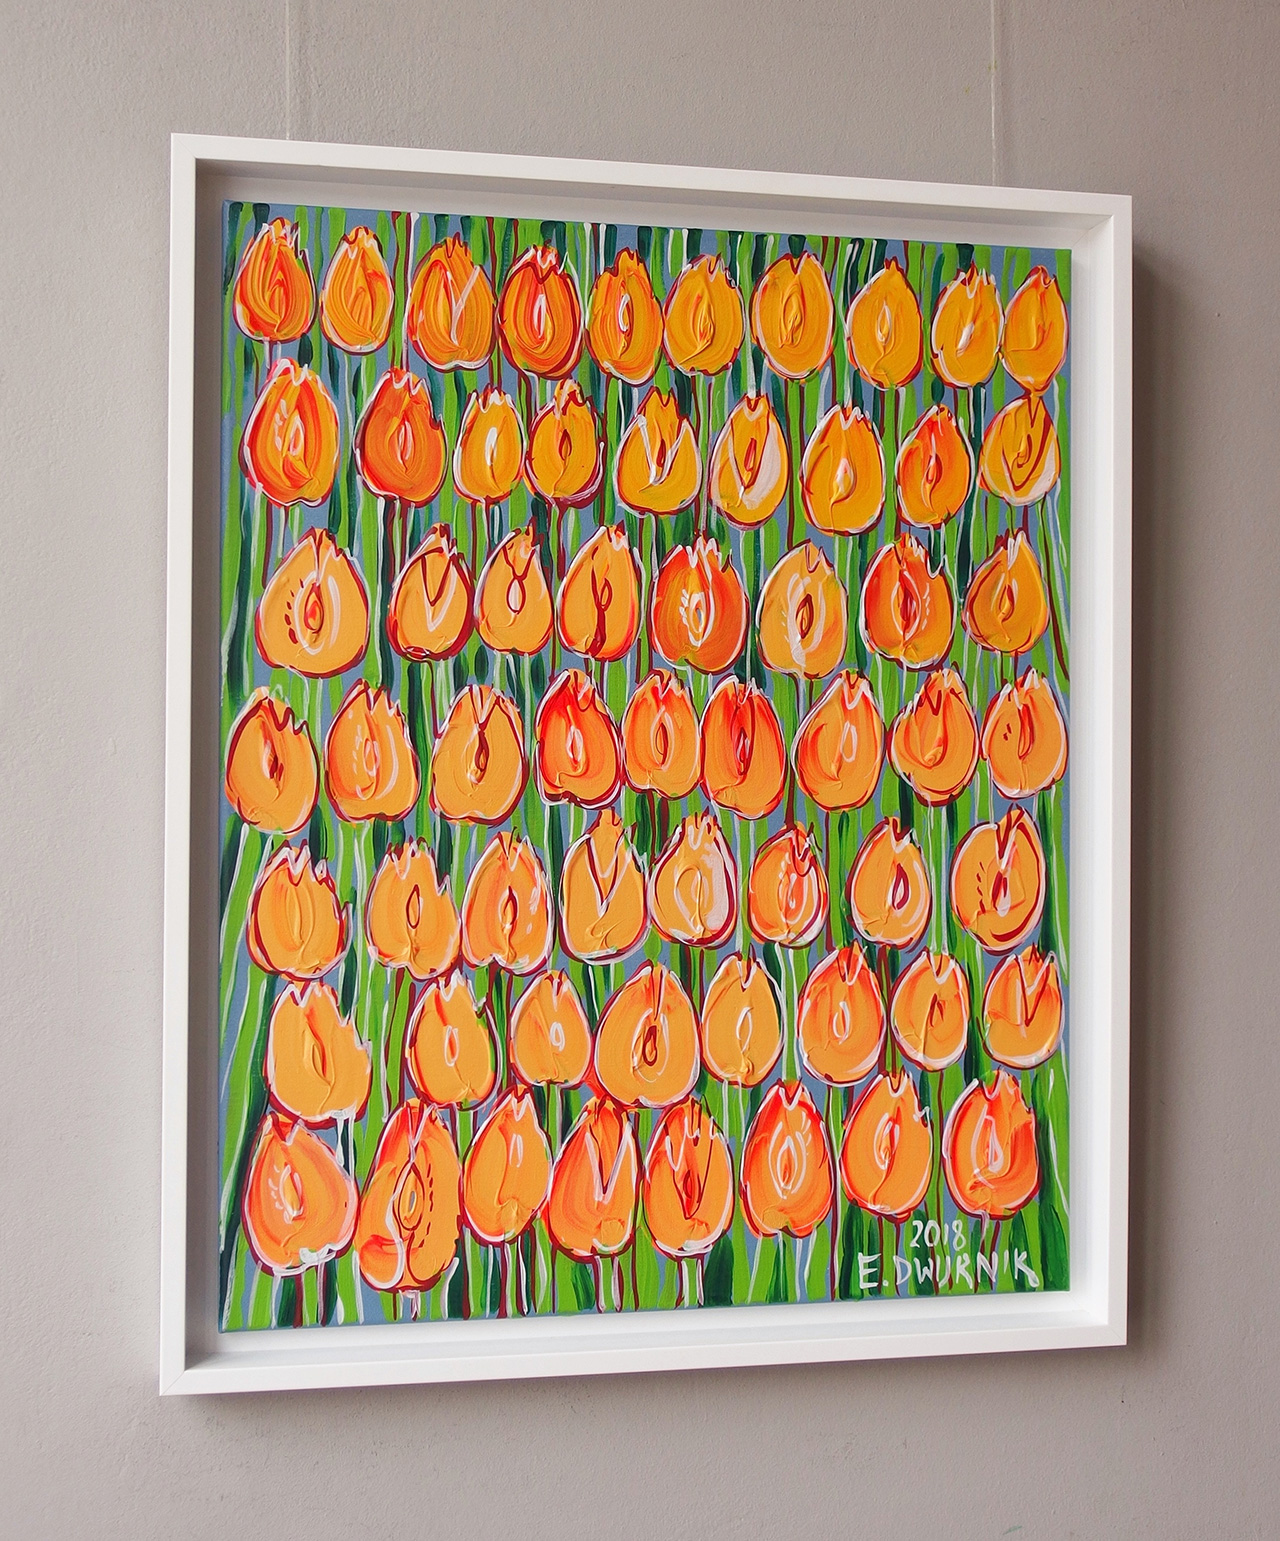 Edward Dwurnik - Yellow tulips